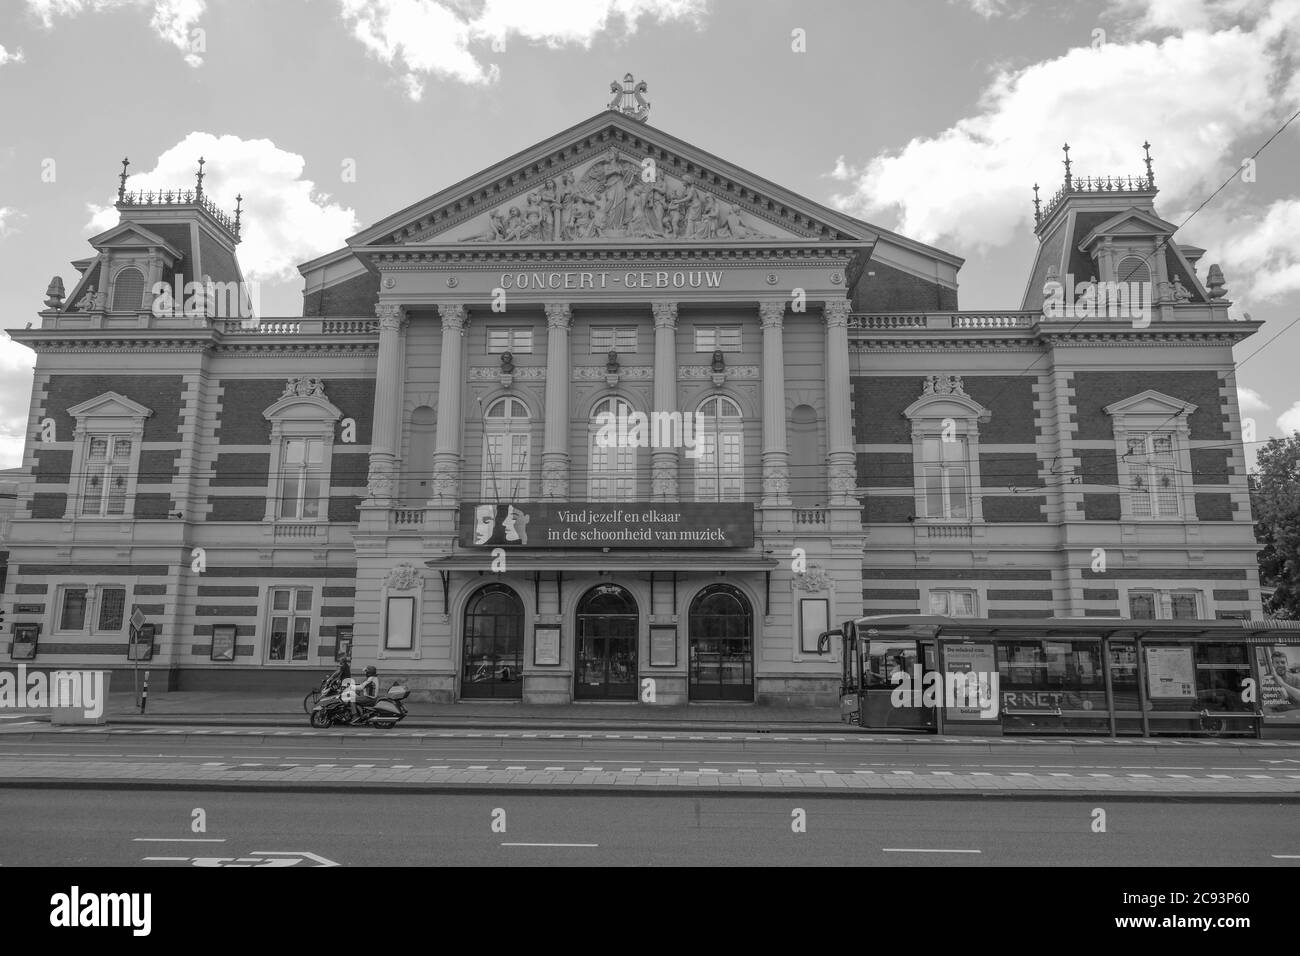 Concertgebouw, Amsterdam Stockfoto